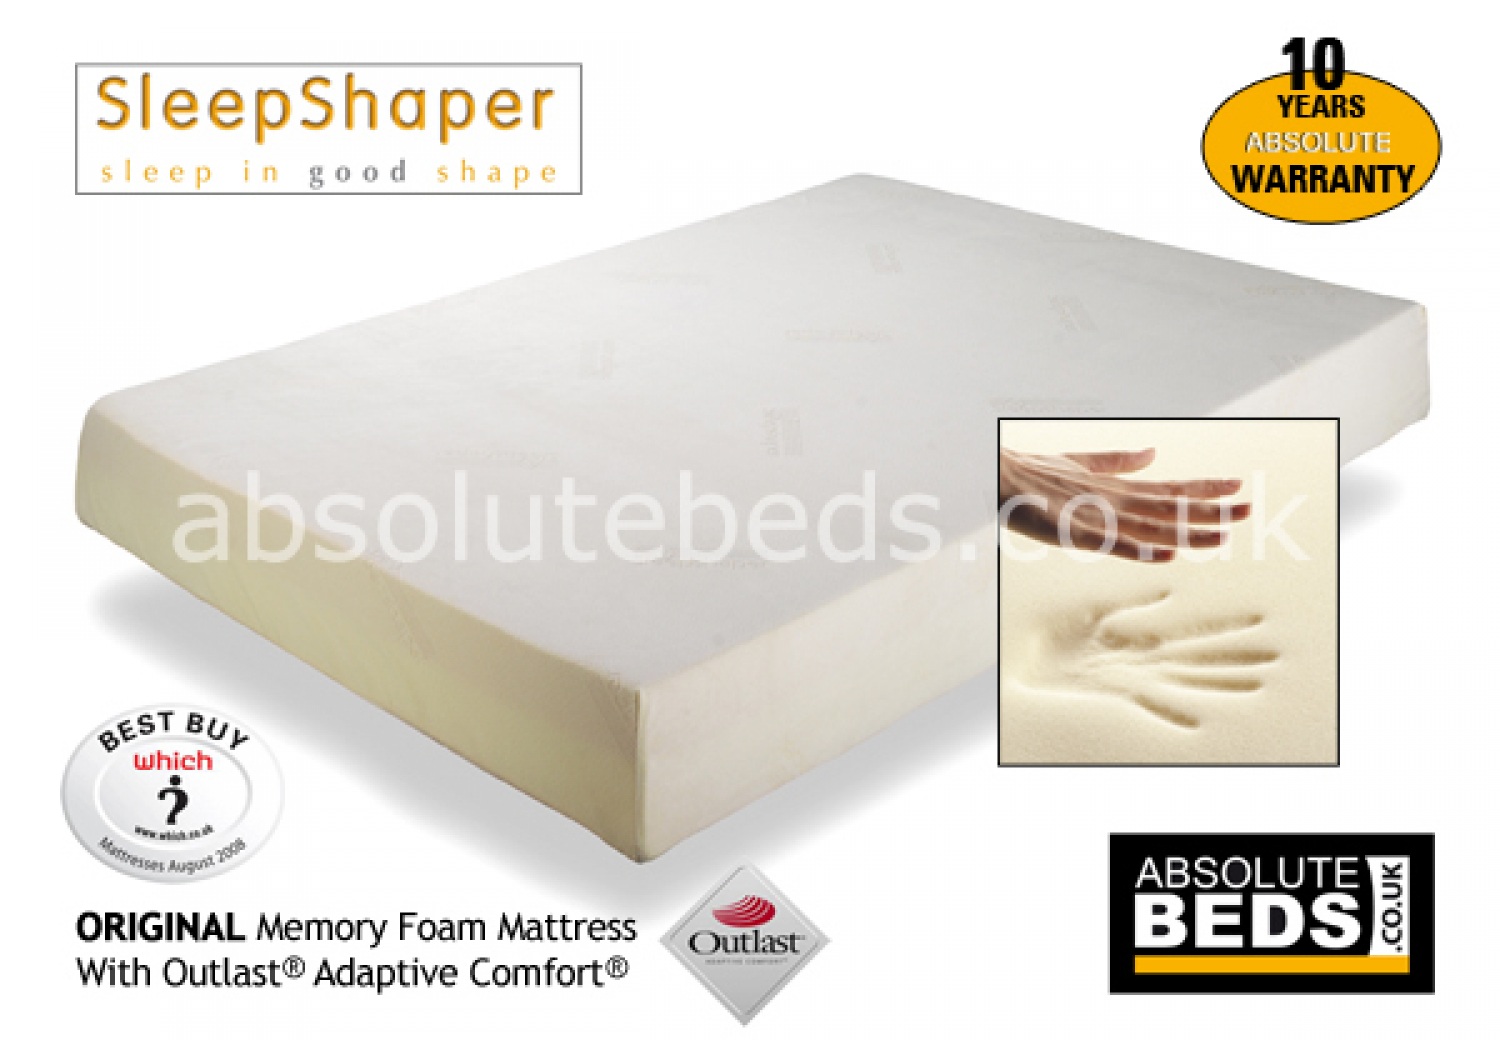 sleepshaper original memory foam mattress with outlast adaptive comfort, SleepShapers Original Memory Foam Mattress was awarded Best Buy status by Which?  image